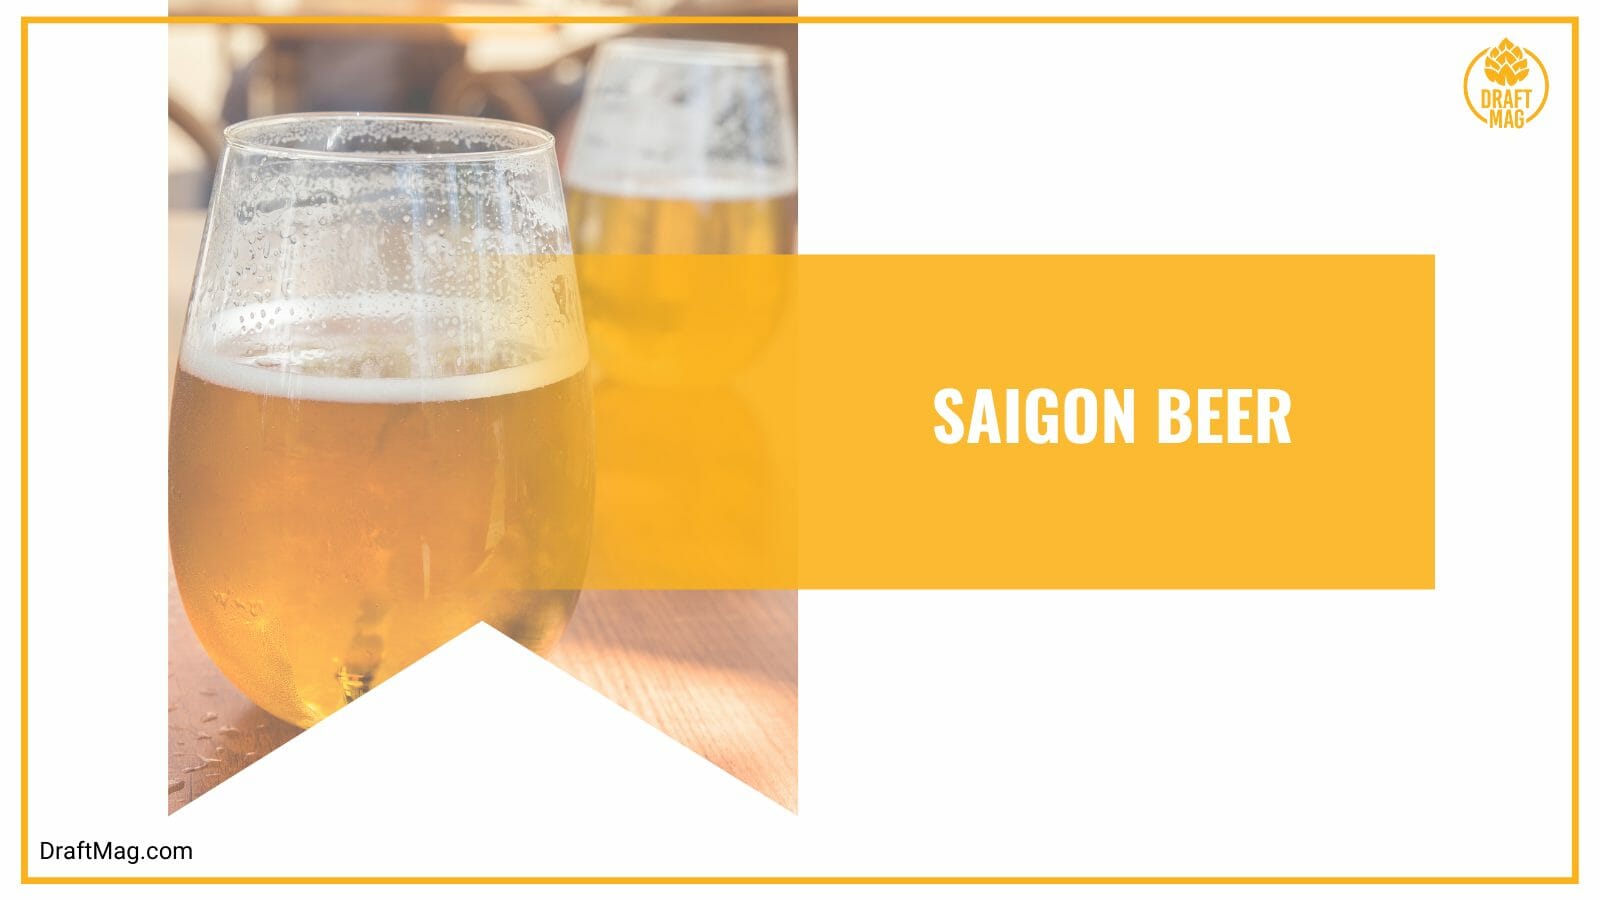 Saigon beer with a sweet taste